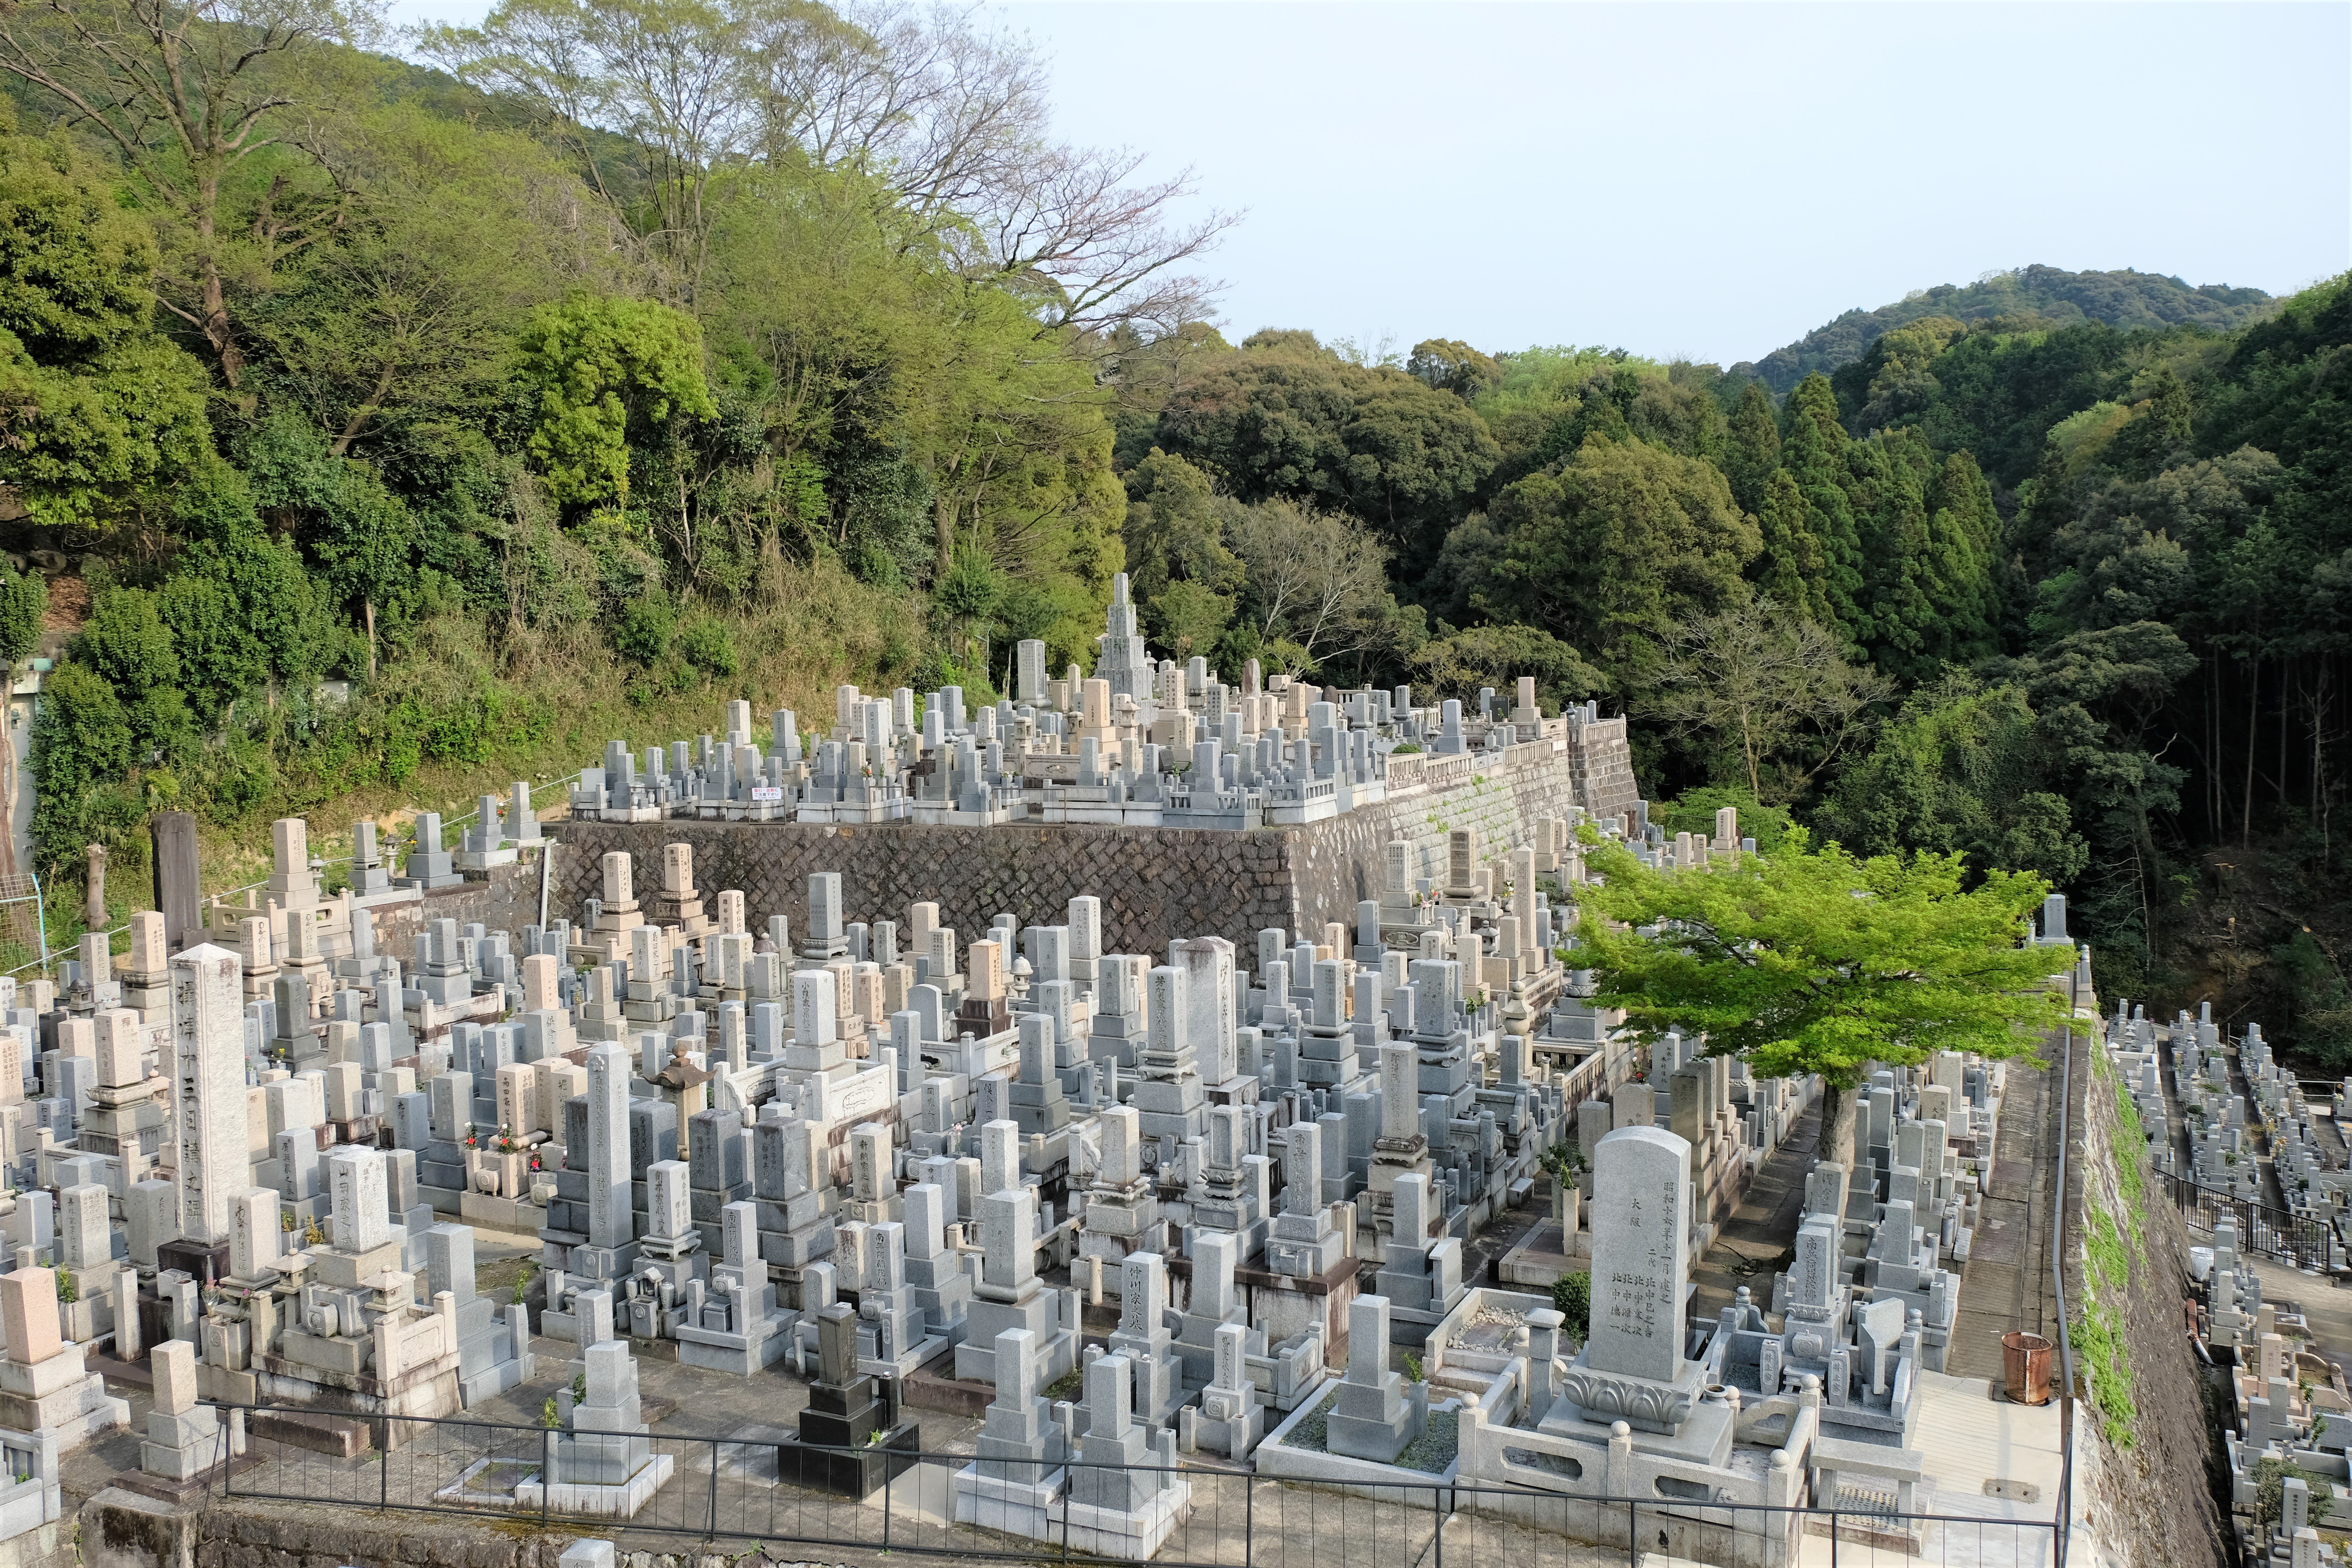 Otani Cemetery